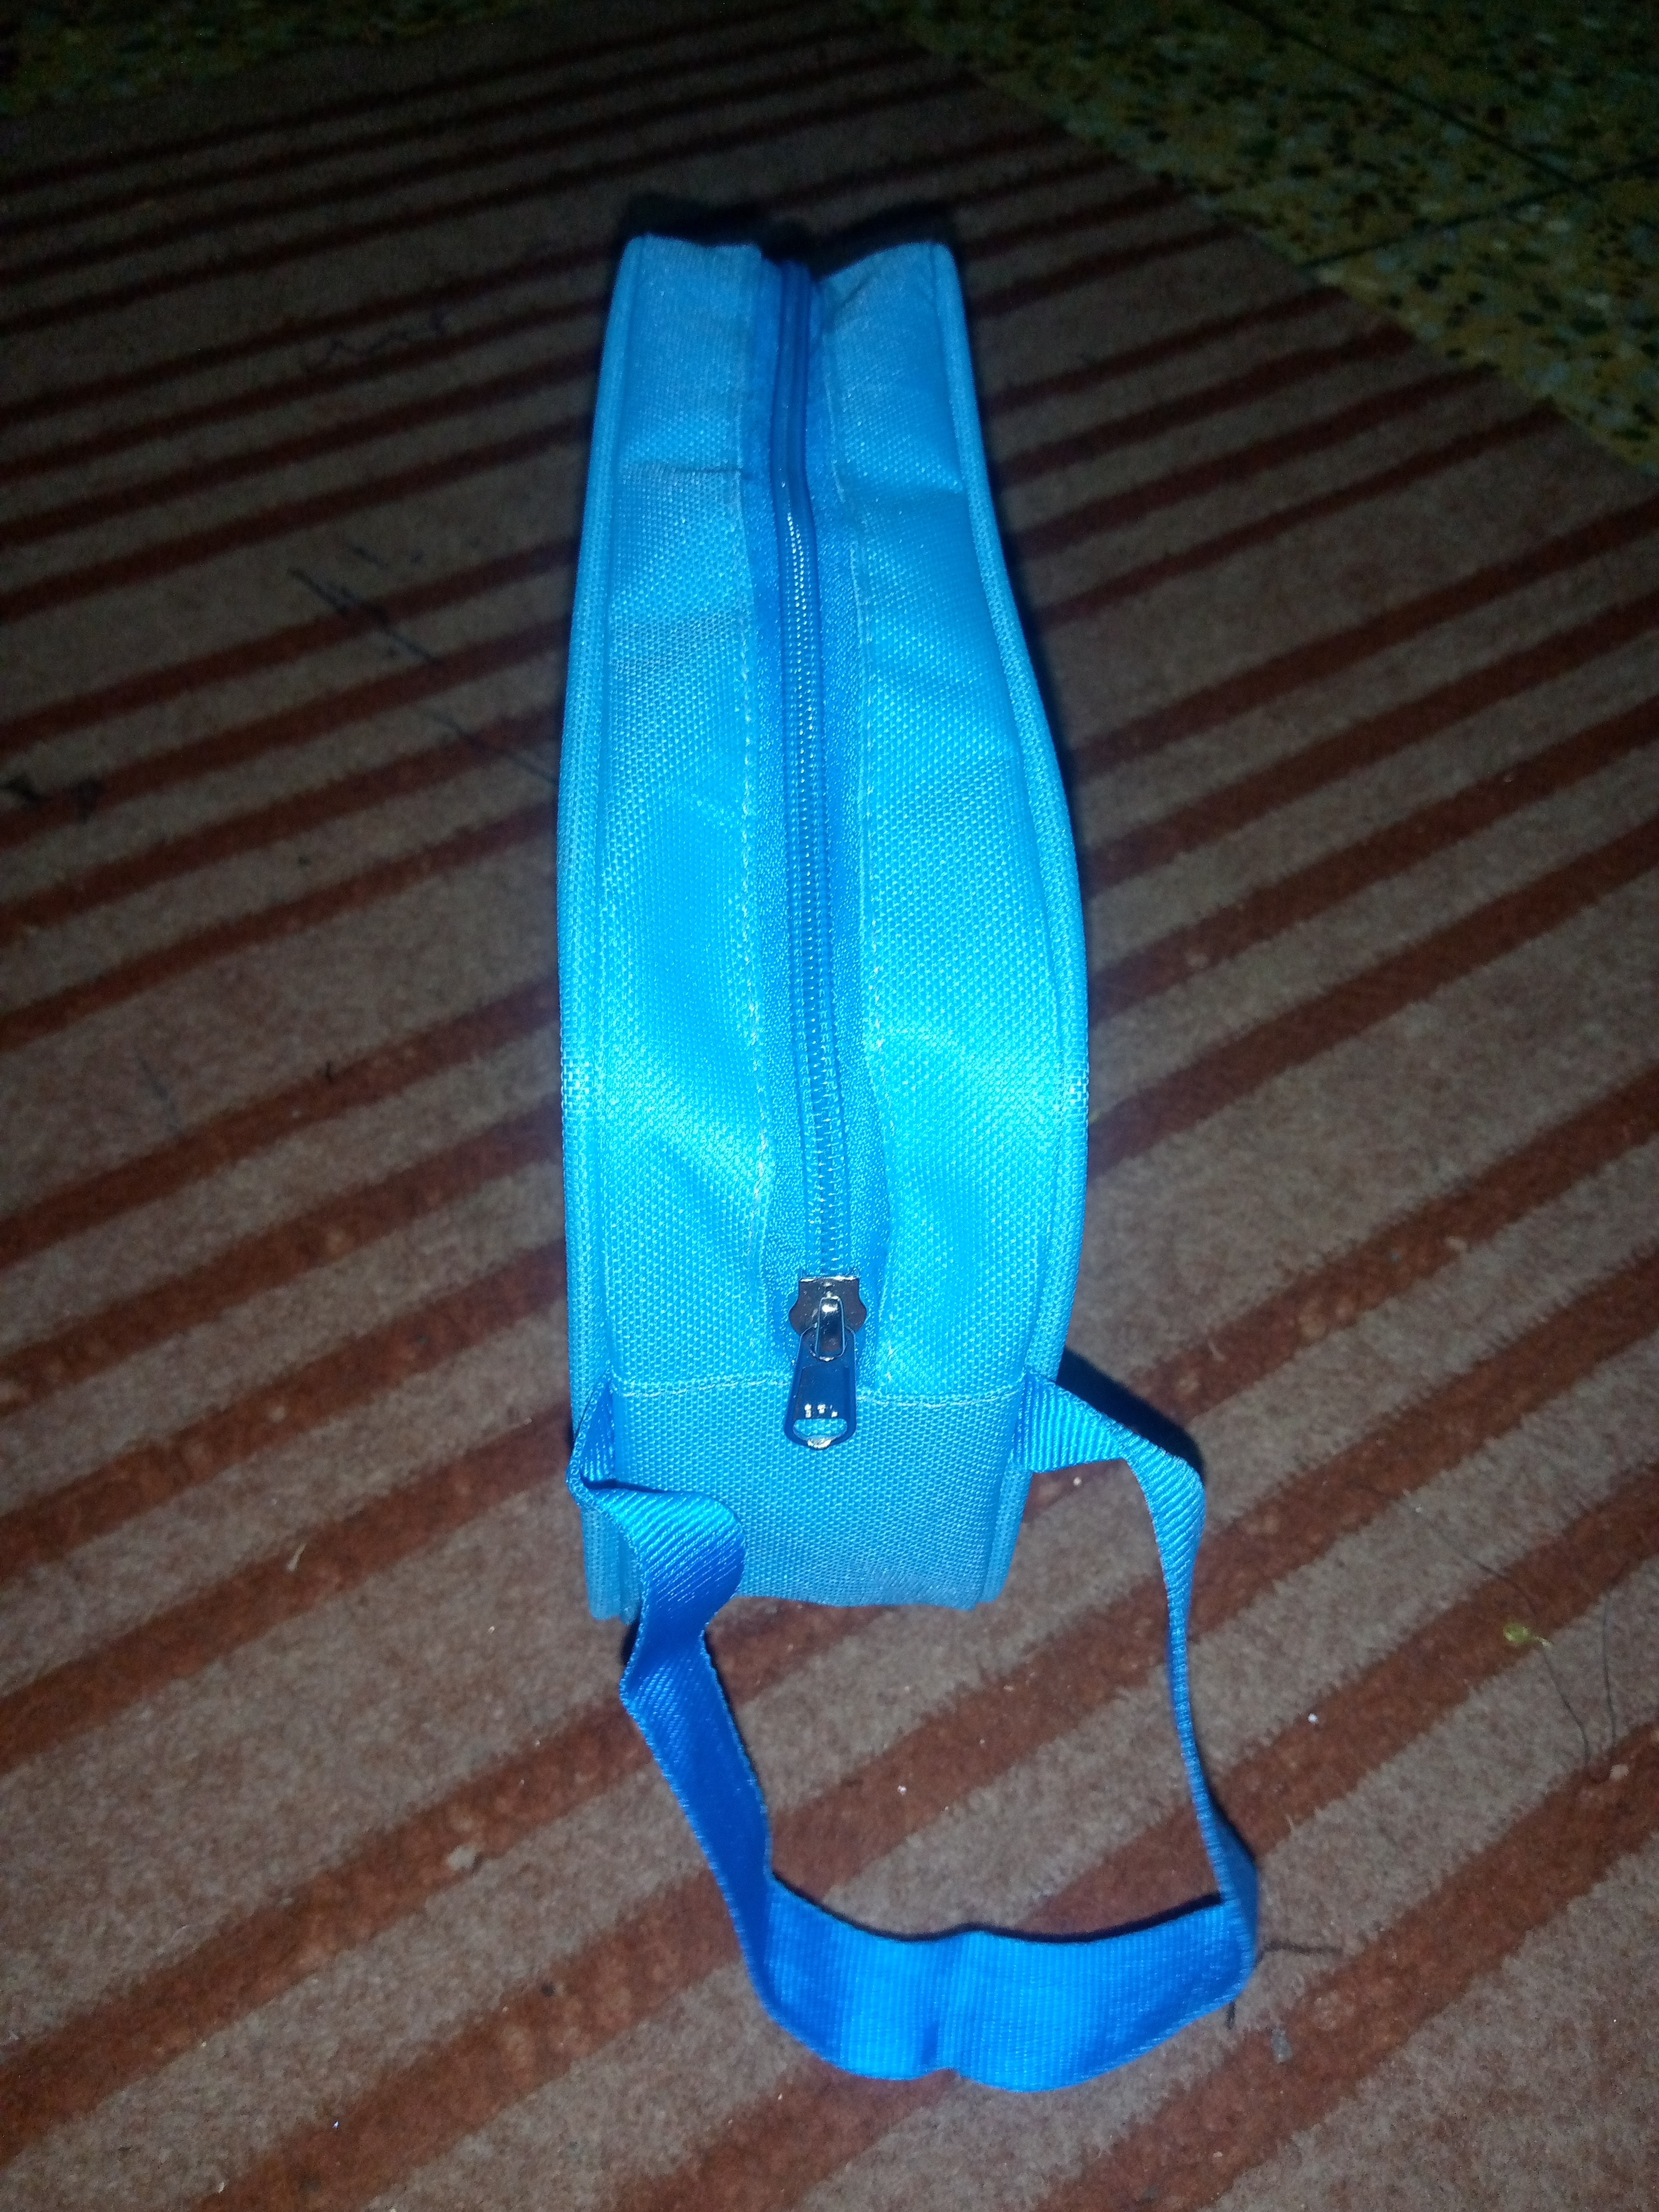 Kit bag